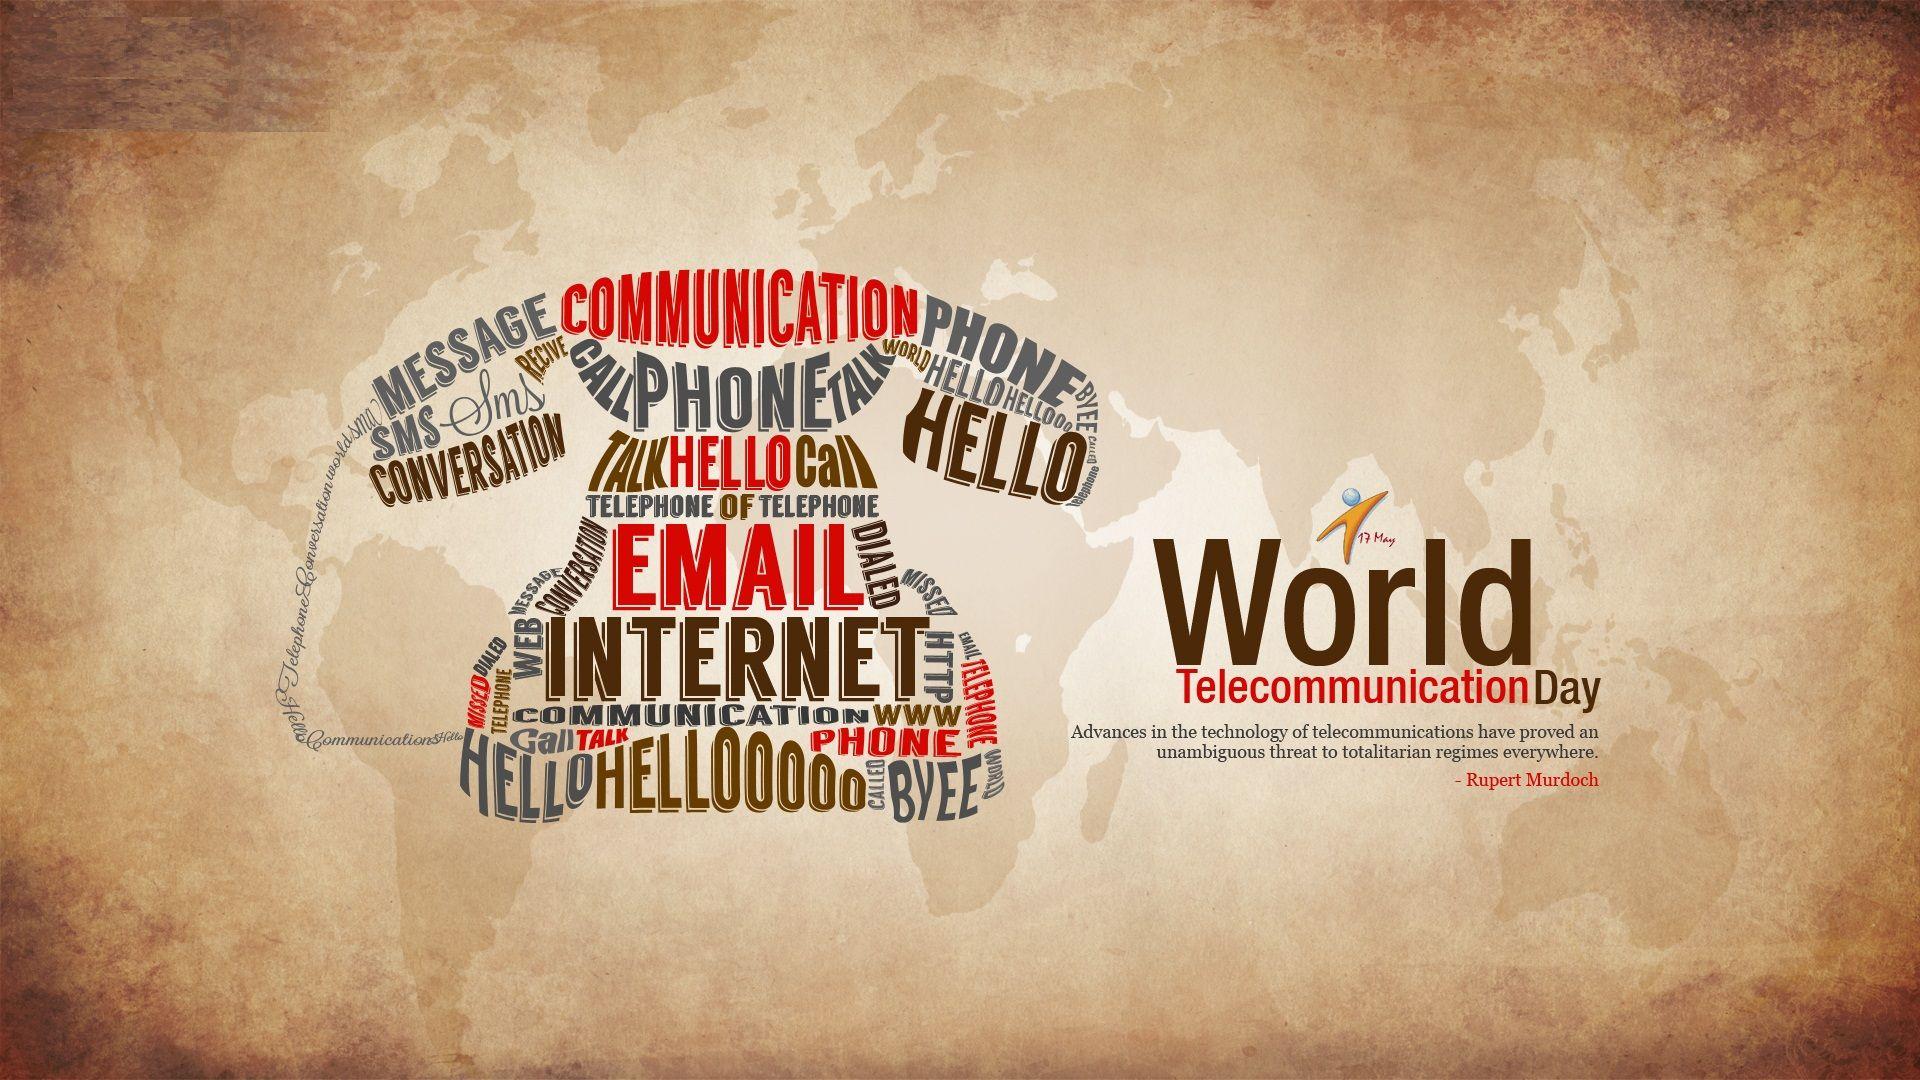 World Telecommunication Day Picture, Image